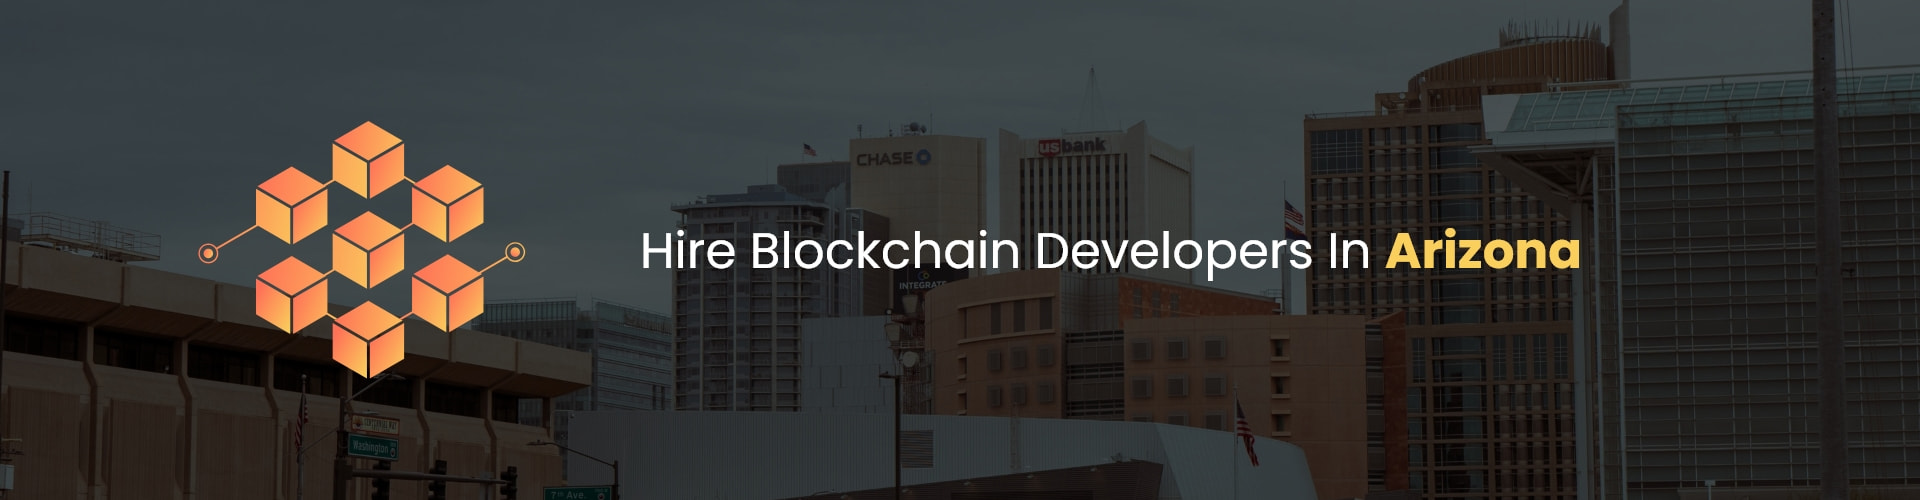 hire blockchain developers in arizona